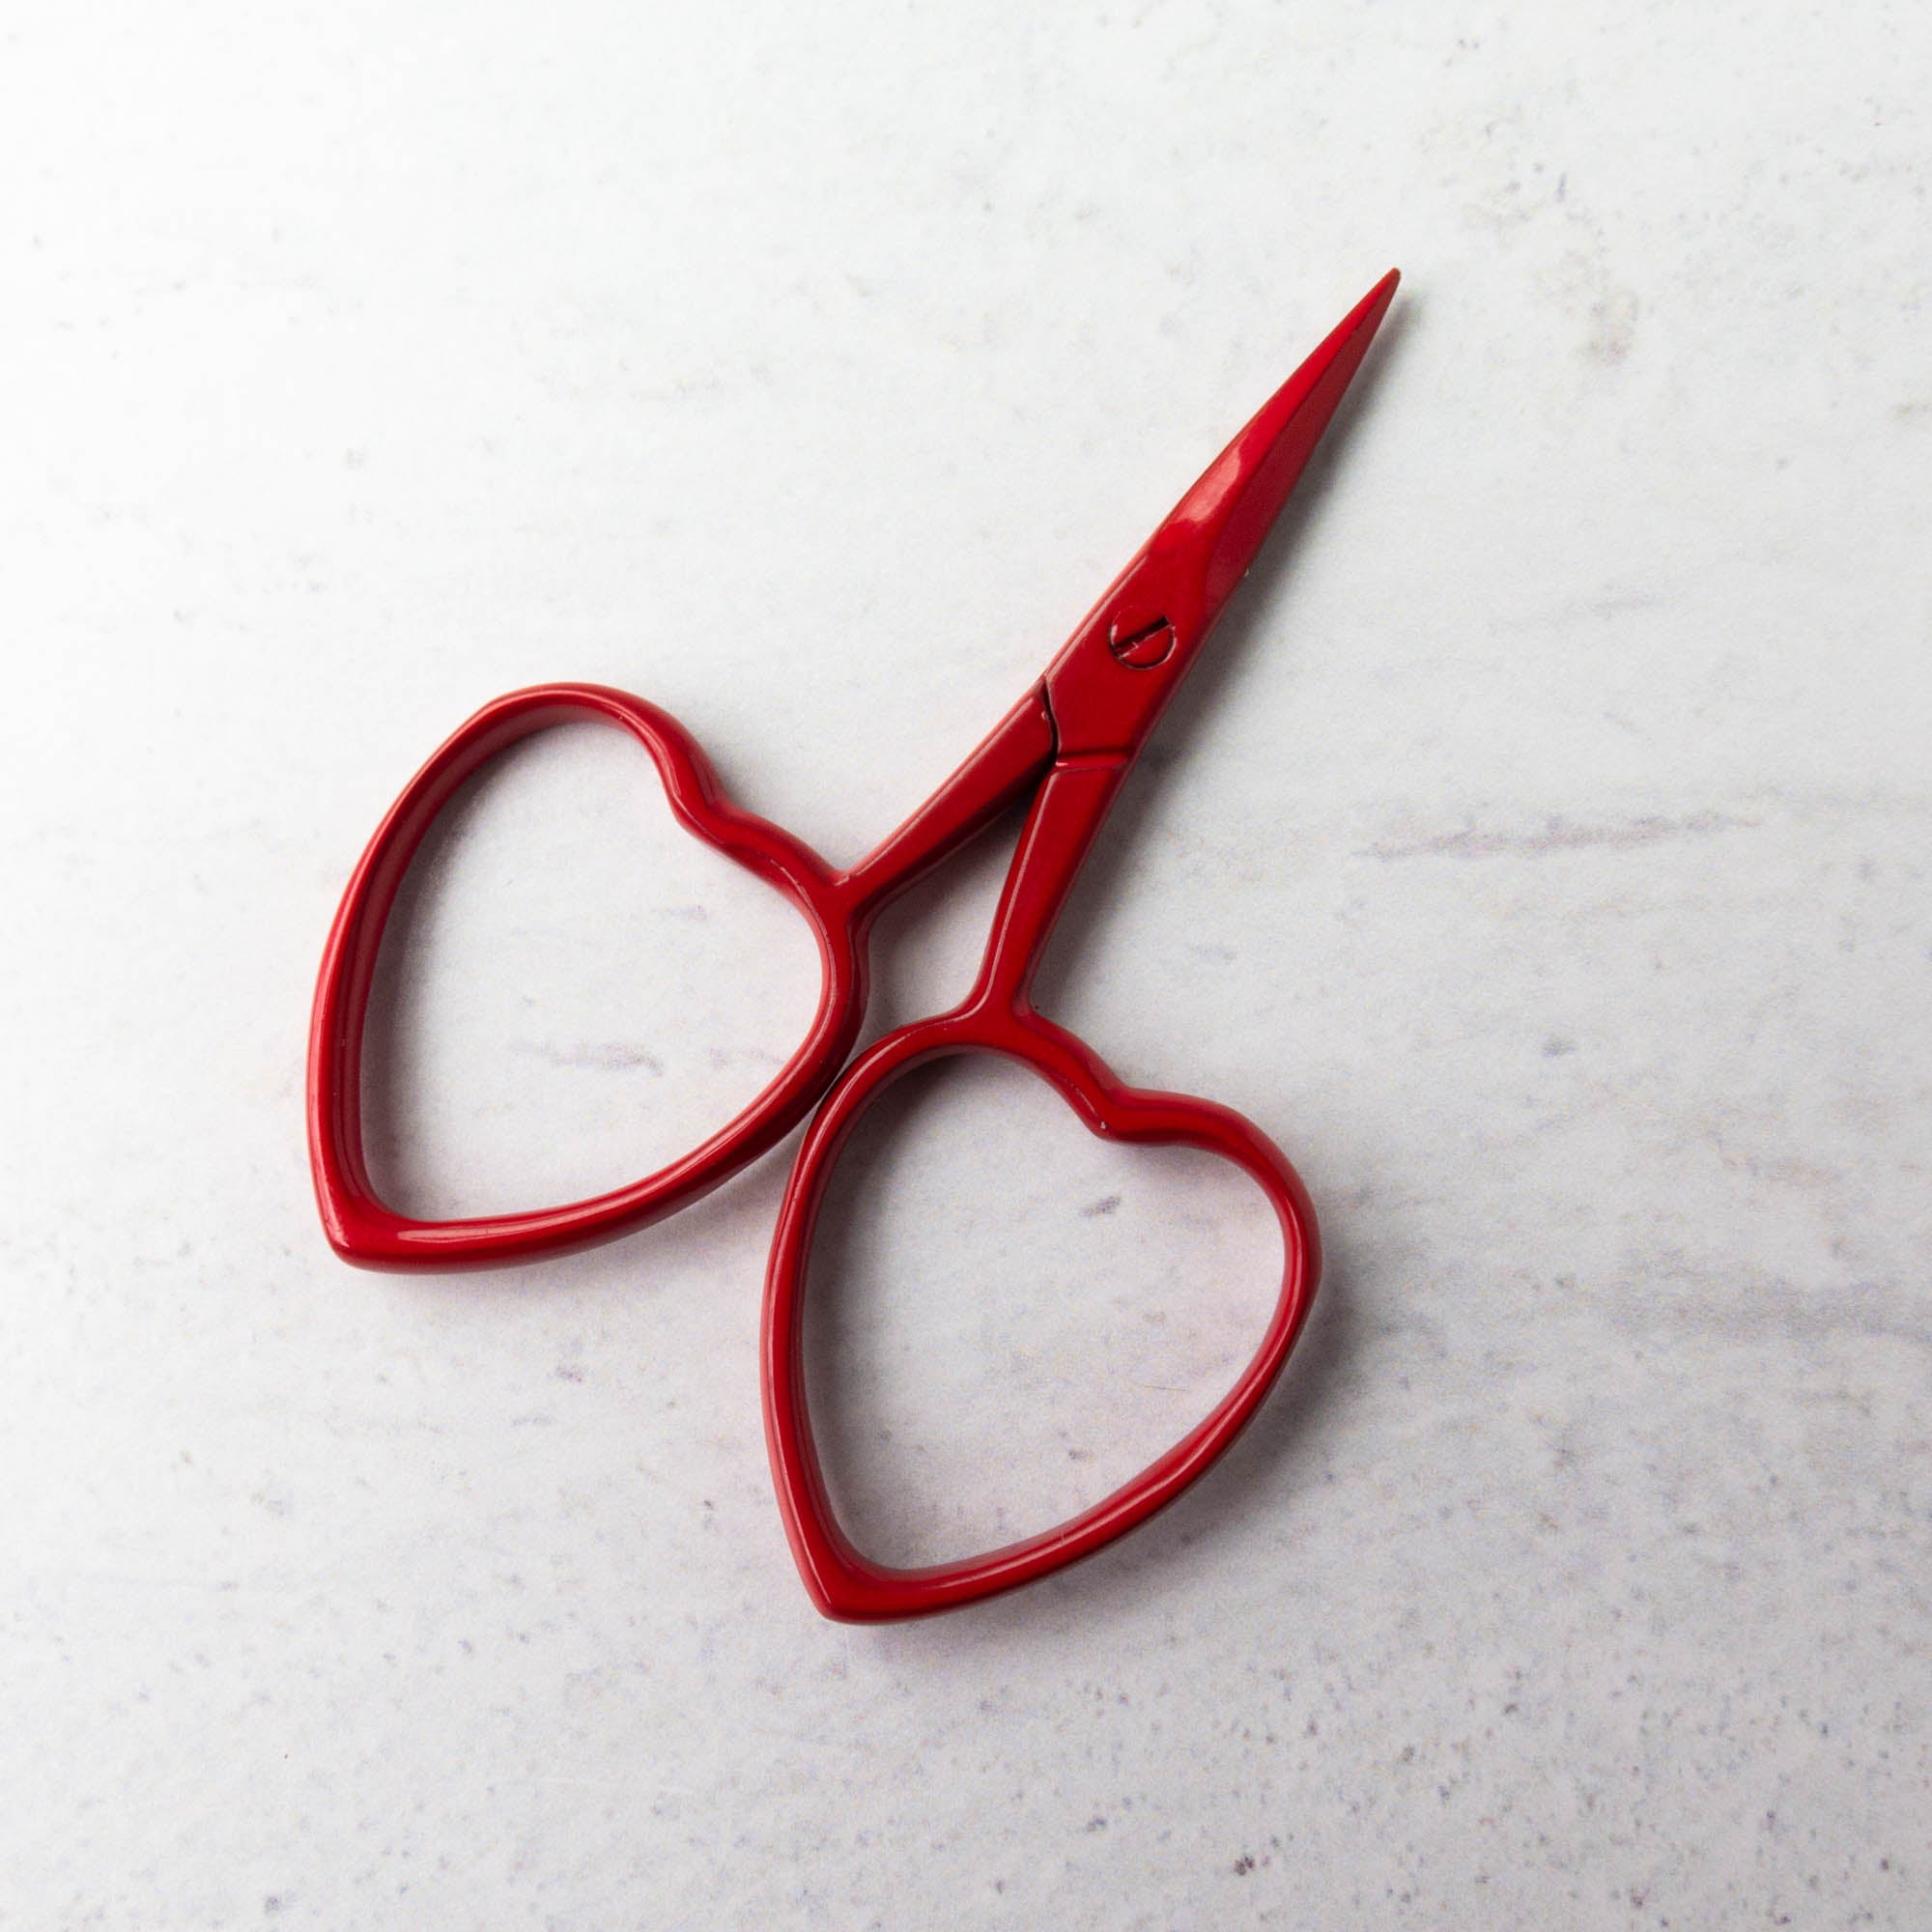 Small Sewing Scissors, Prym Love Sharp Embroidery Scissors, Handy